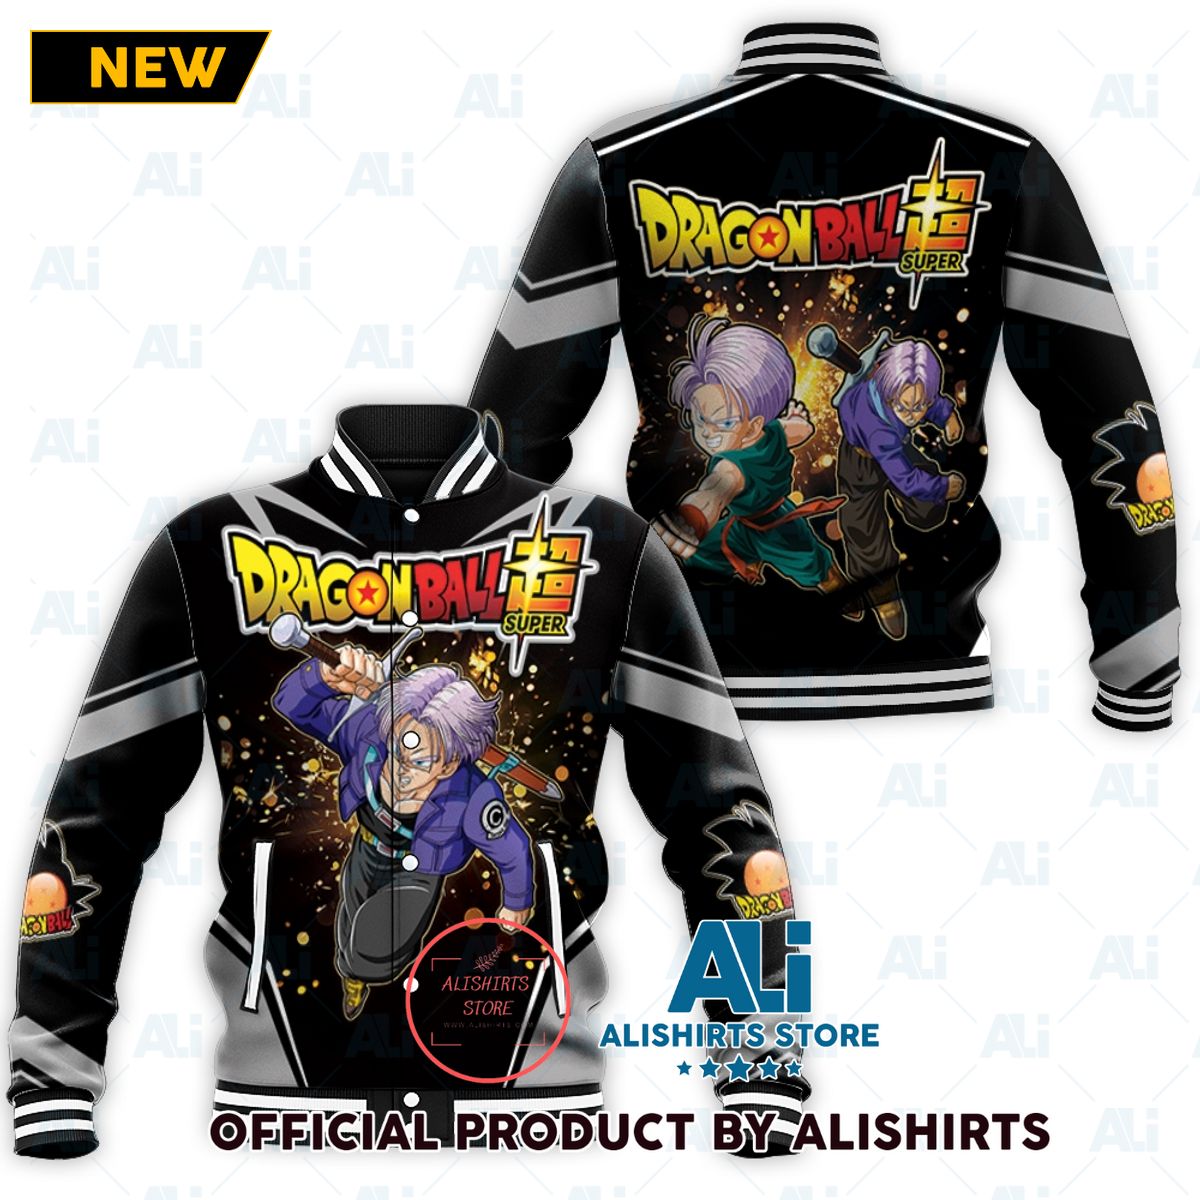 Trunks Future Saiyan Dragon Balls Super varsity jacket